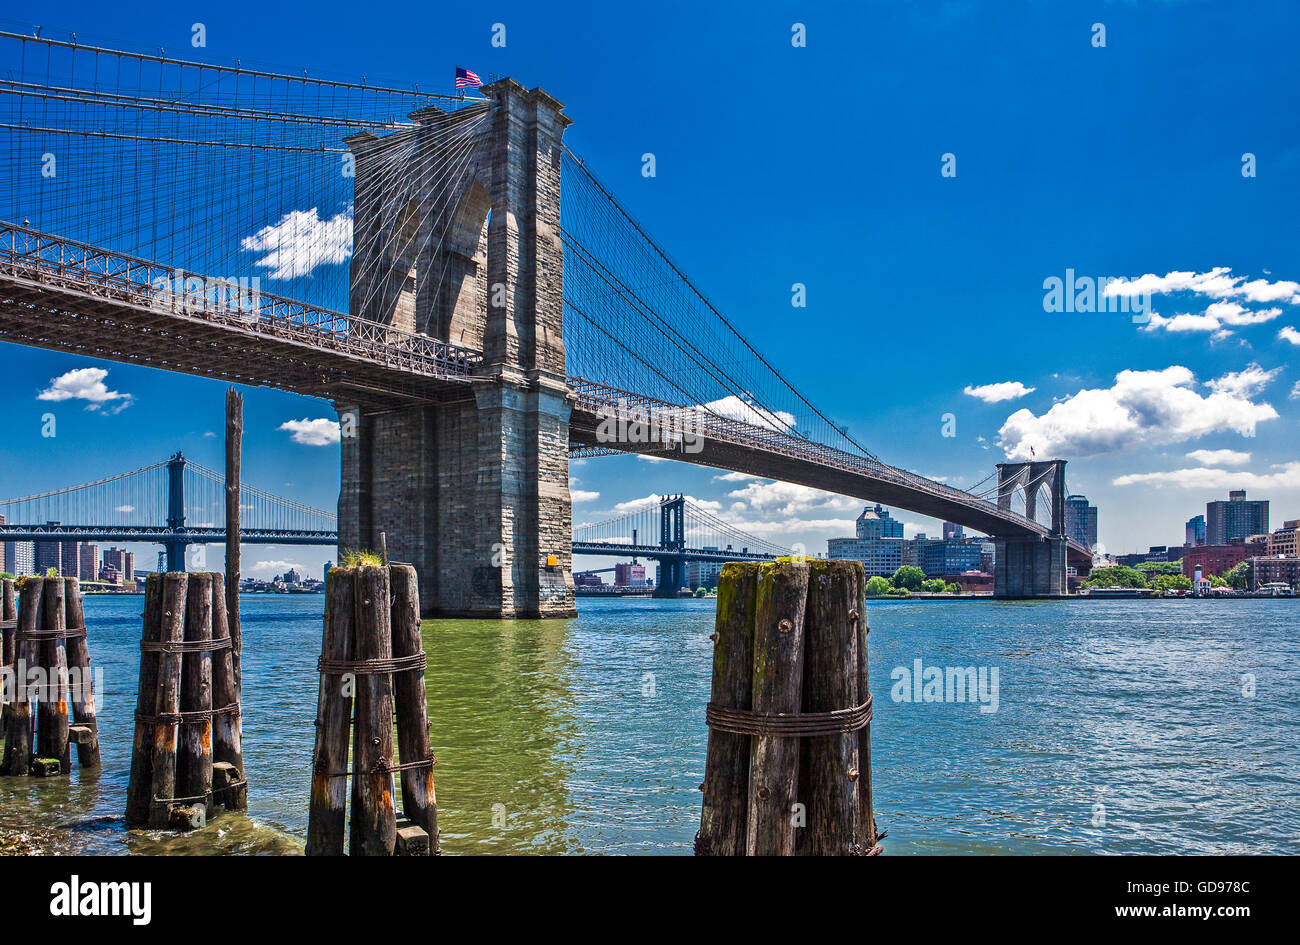 U.S.A., New York,Manhattan,the Brooklyn Bridge seen from the South Street Seaport area Stock Photo